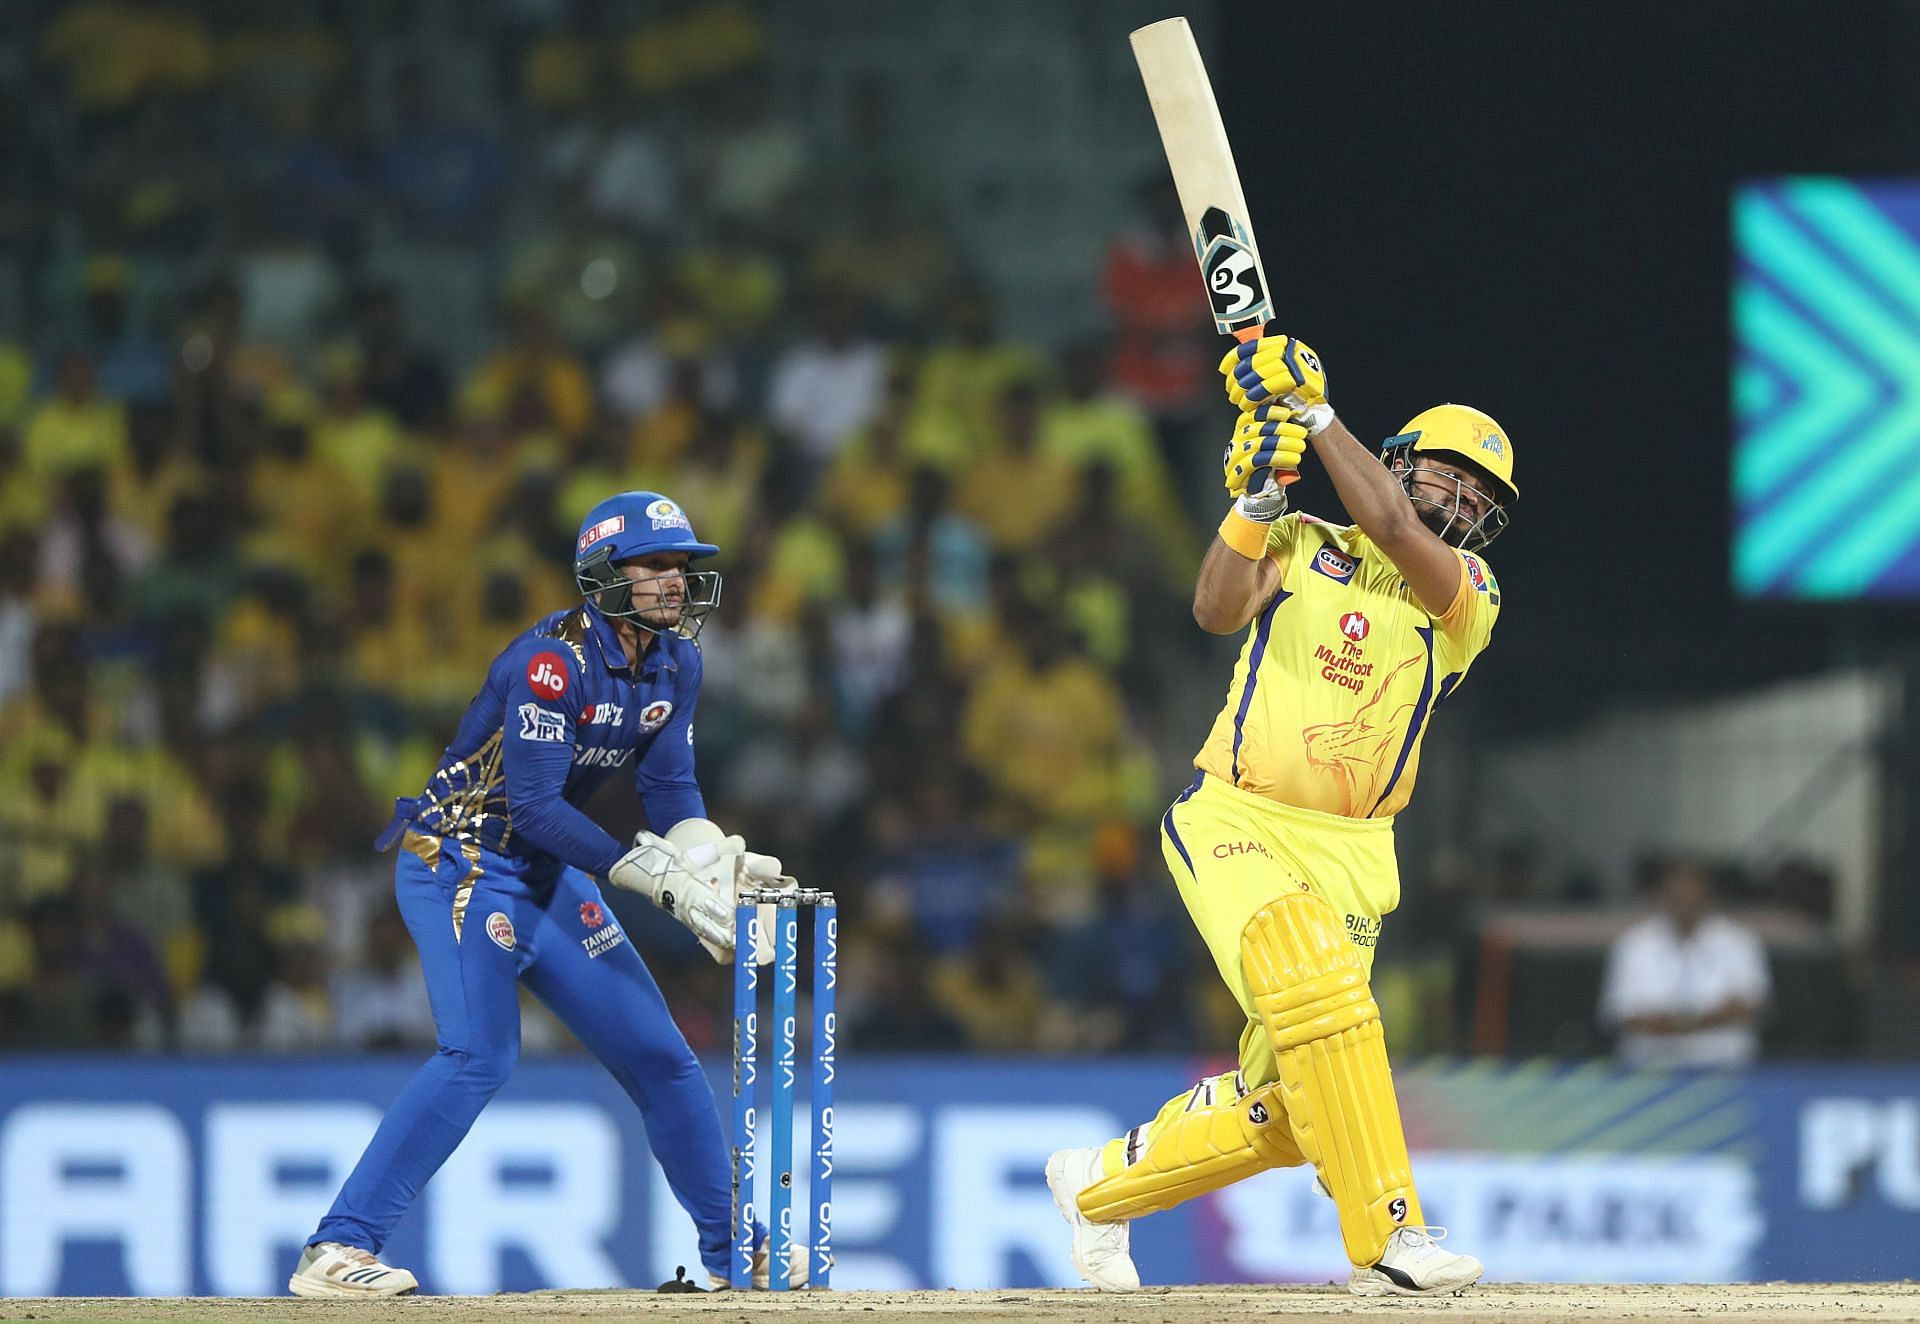 Suresh Raina batting for Chennai Super Kings. Pic: Getty Images